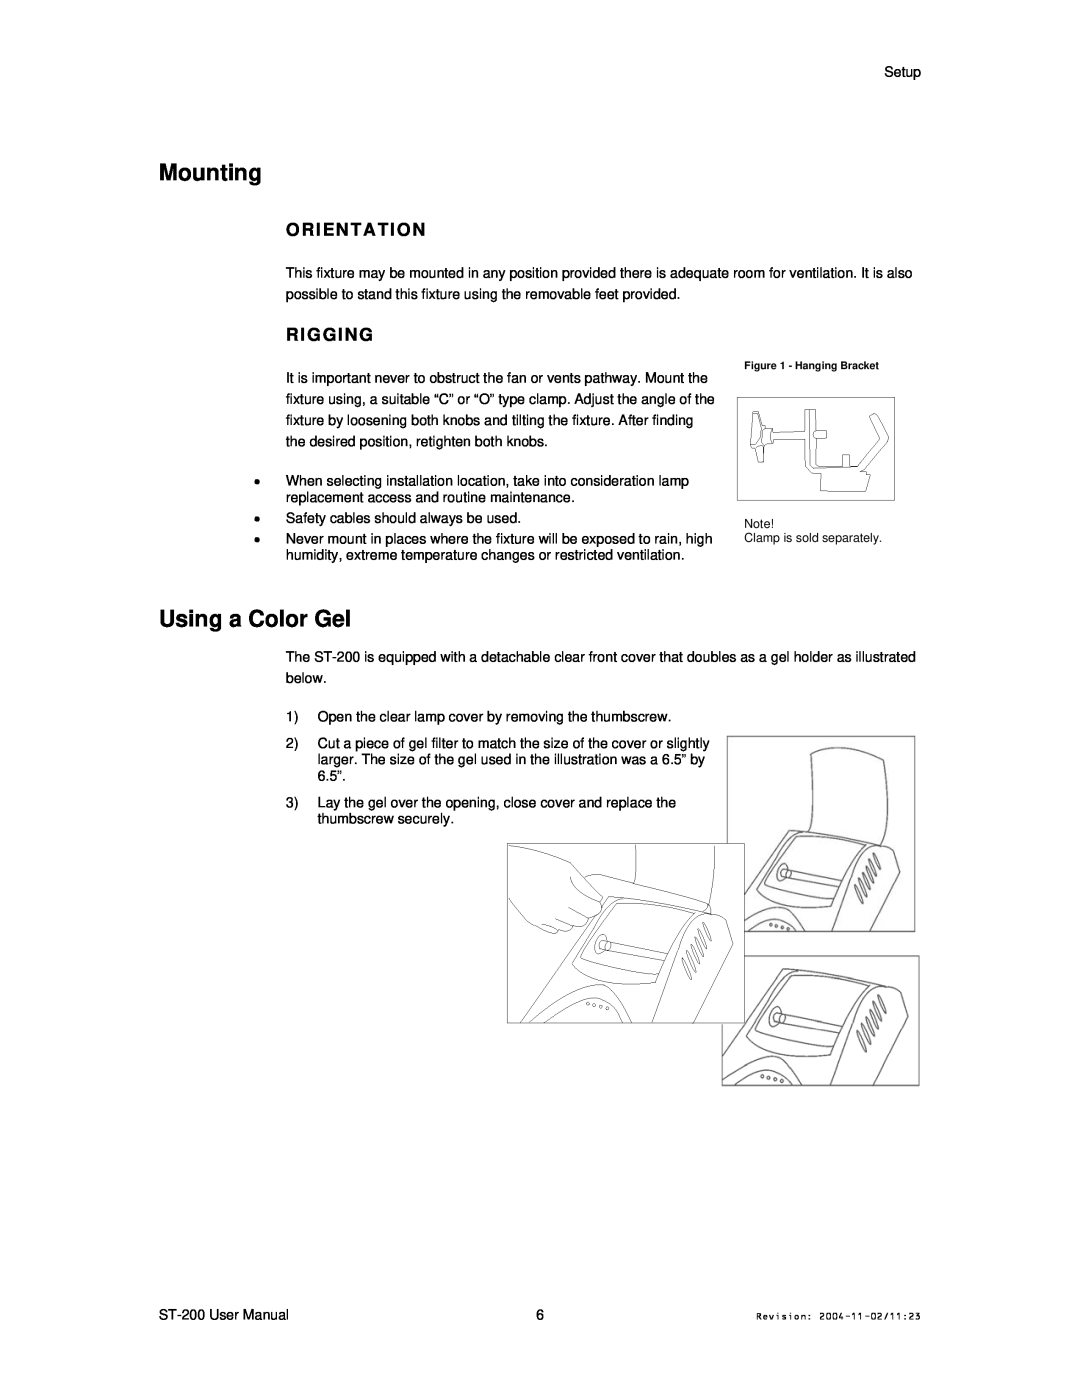 Chauvet Model ST-200 user manual Mounting, Using a Color Gel, Orientation, Rigging 